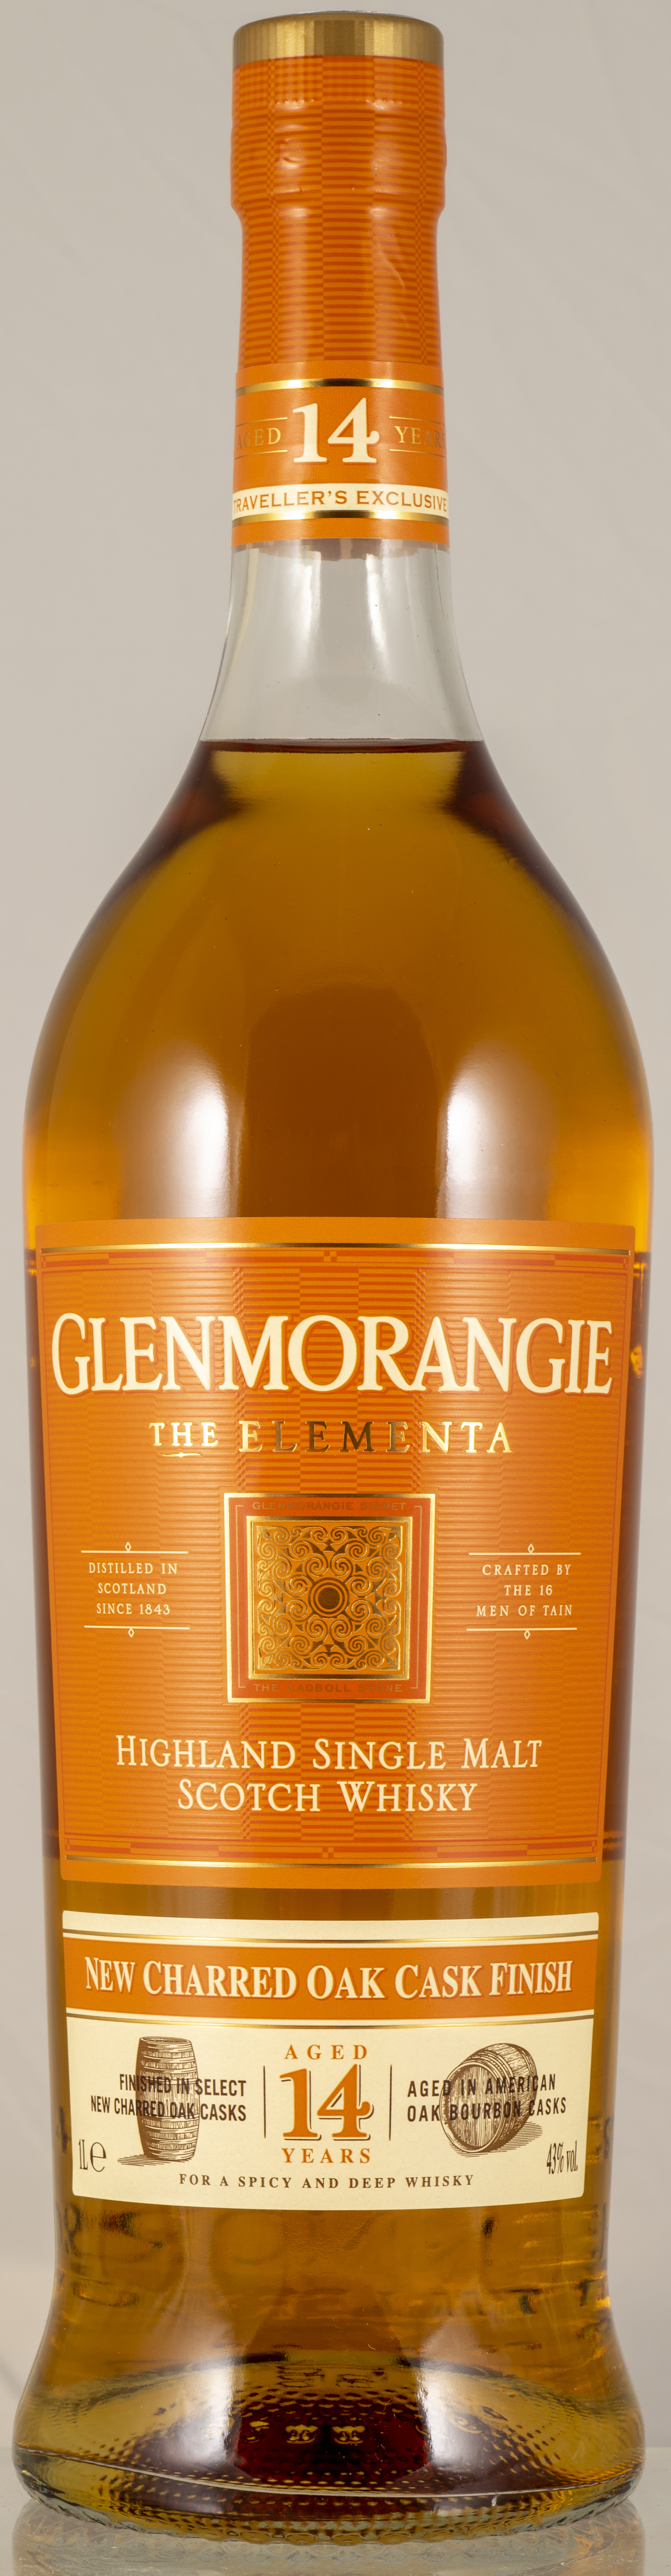 Billede: PHC_7074 - Glenmorangie The Elementa 14 - bottle front.jpg